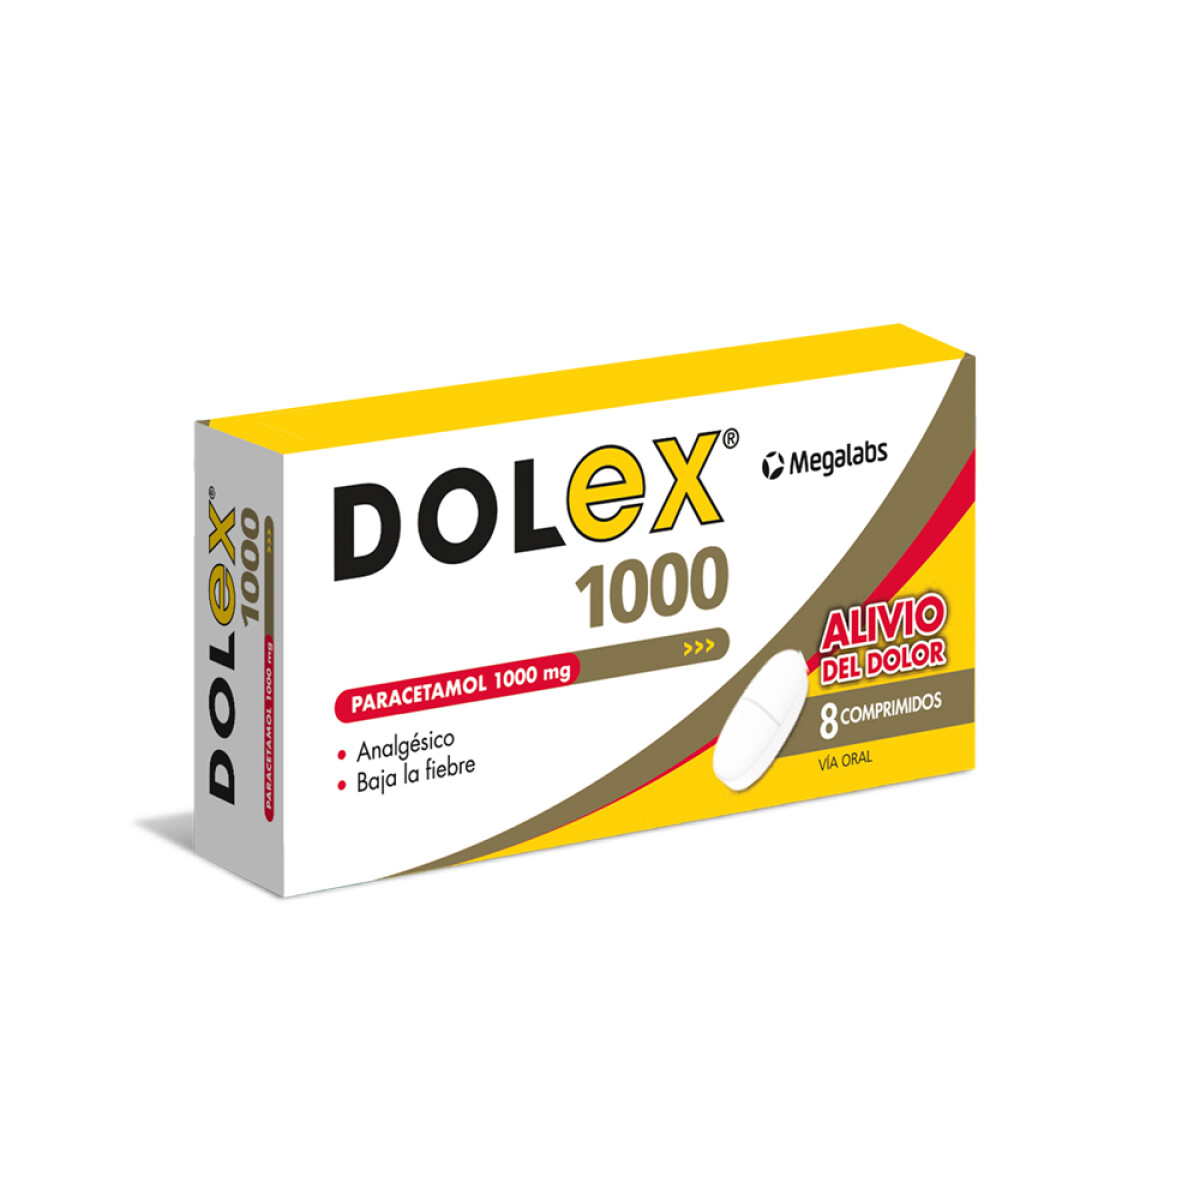 DOLEX 1000 / 8 COMPRIMIDOS 